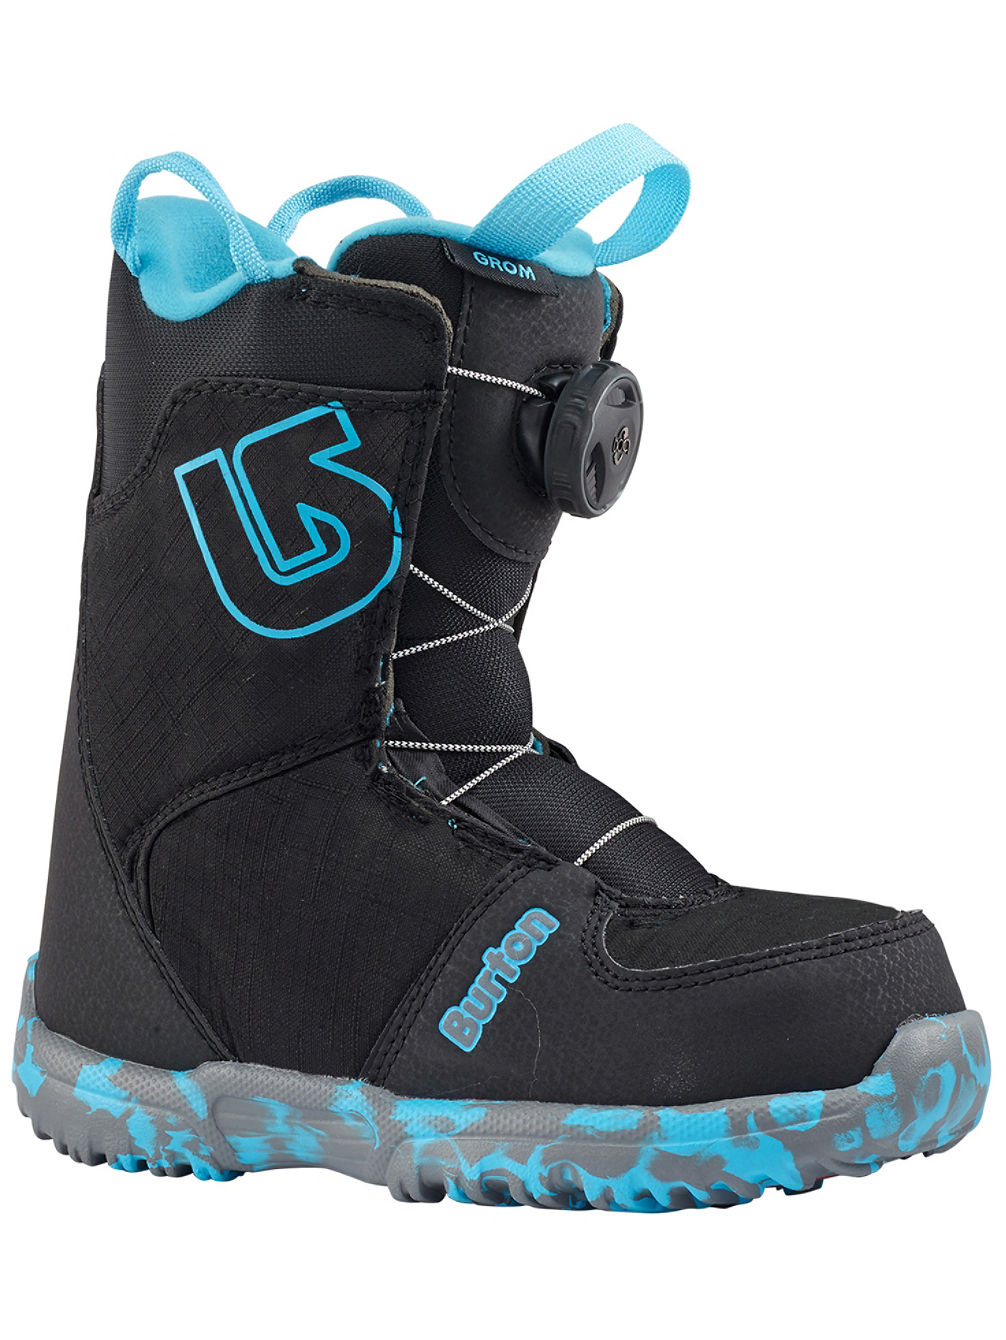 Grom Boa Boots de Snowboard